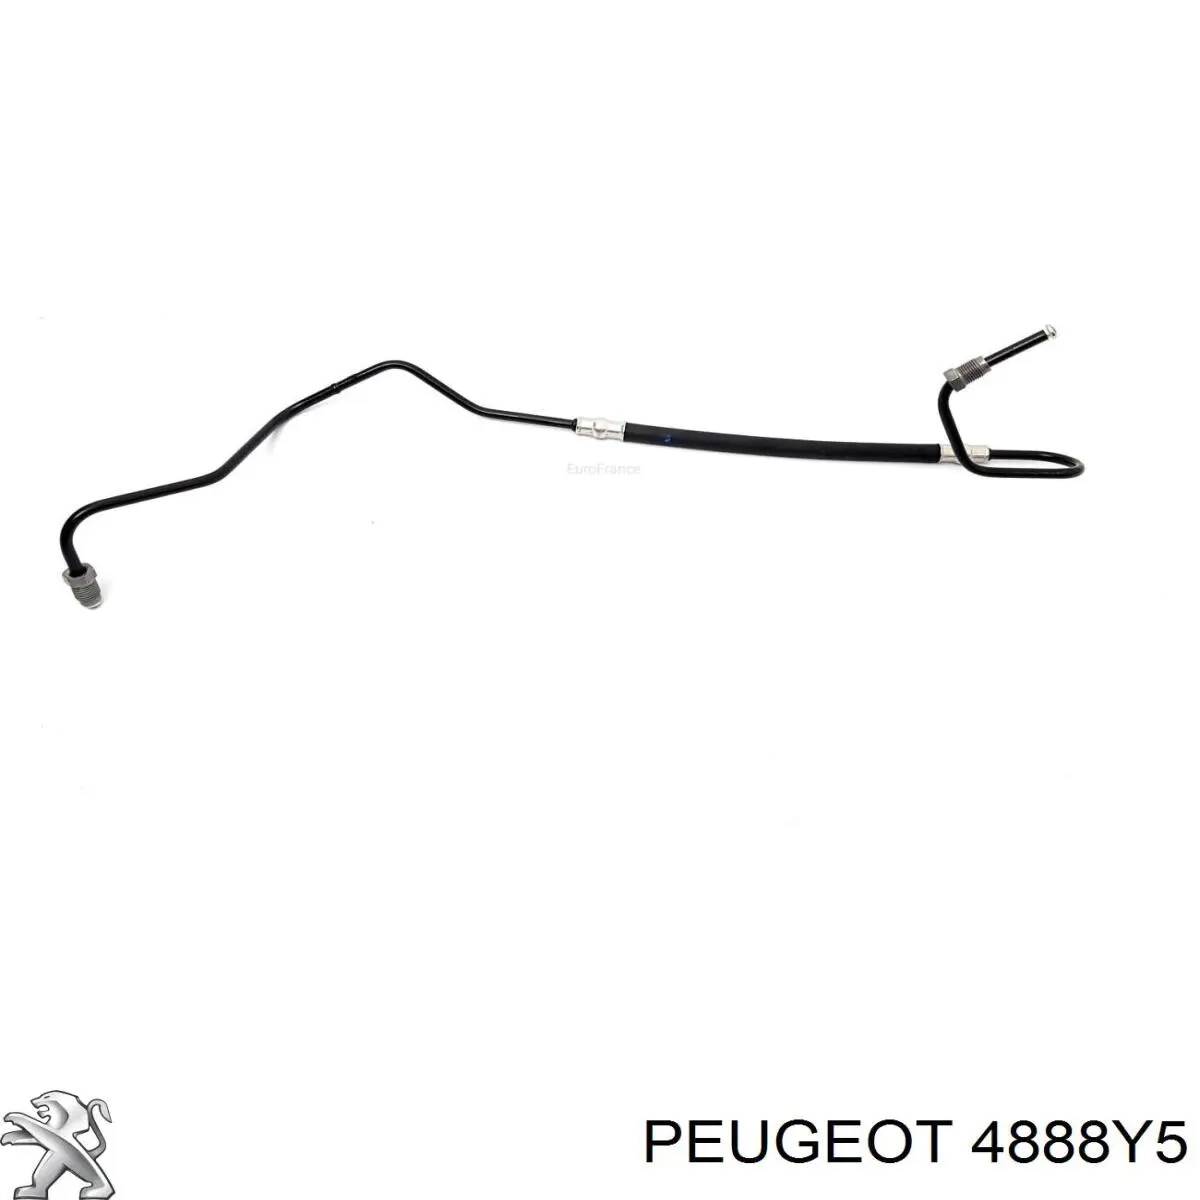 4888Y5 Peugeot/Citroen tubo do freio traseiro esquerdo